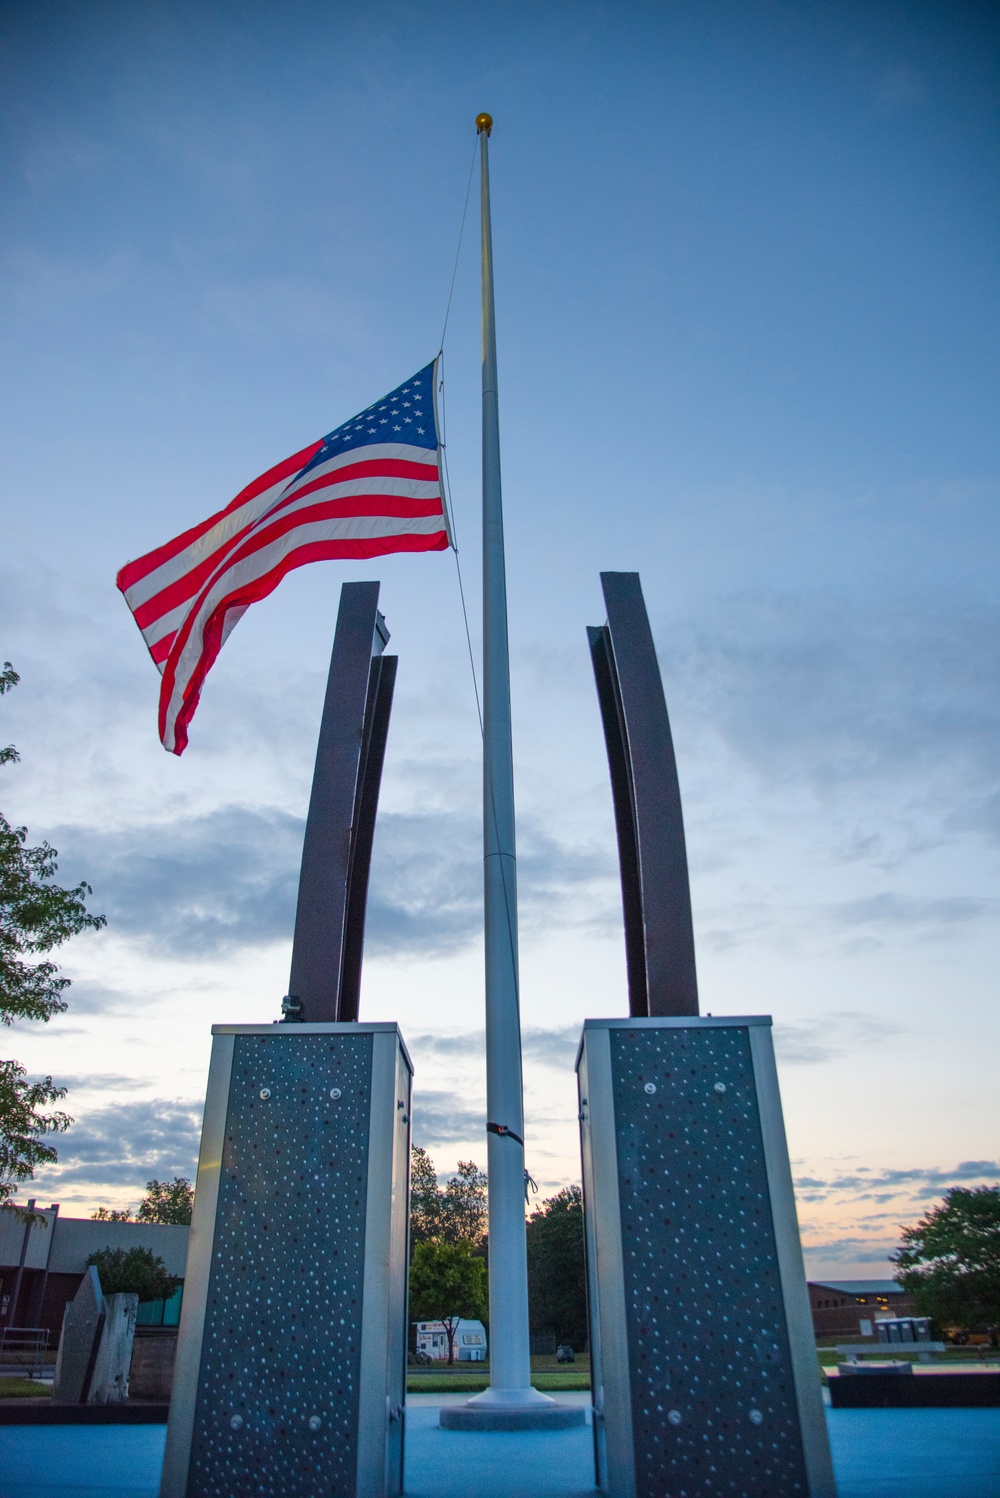 Northwest Ohio 9/11 Memorial: Remembering 9/11 20 Years Later